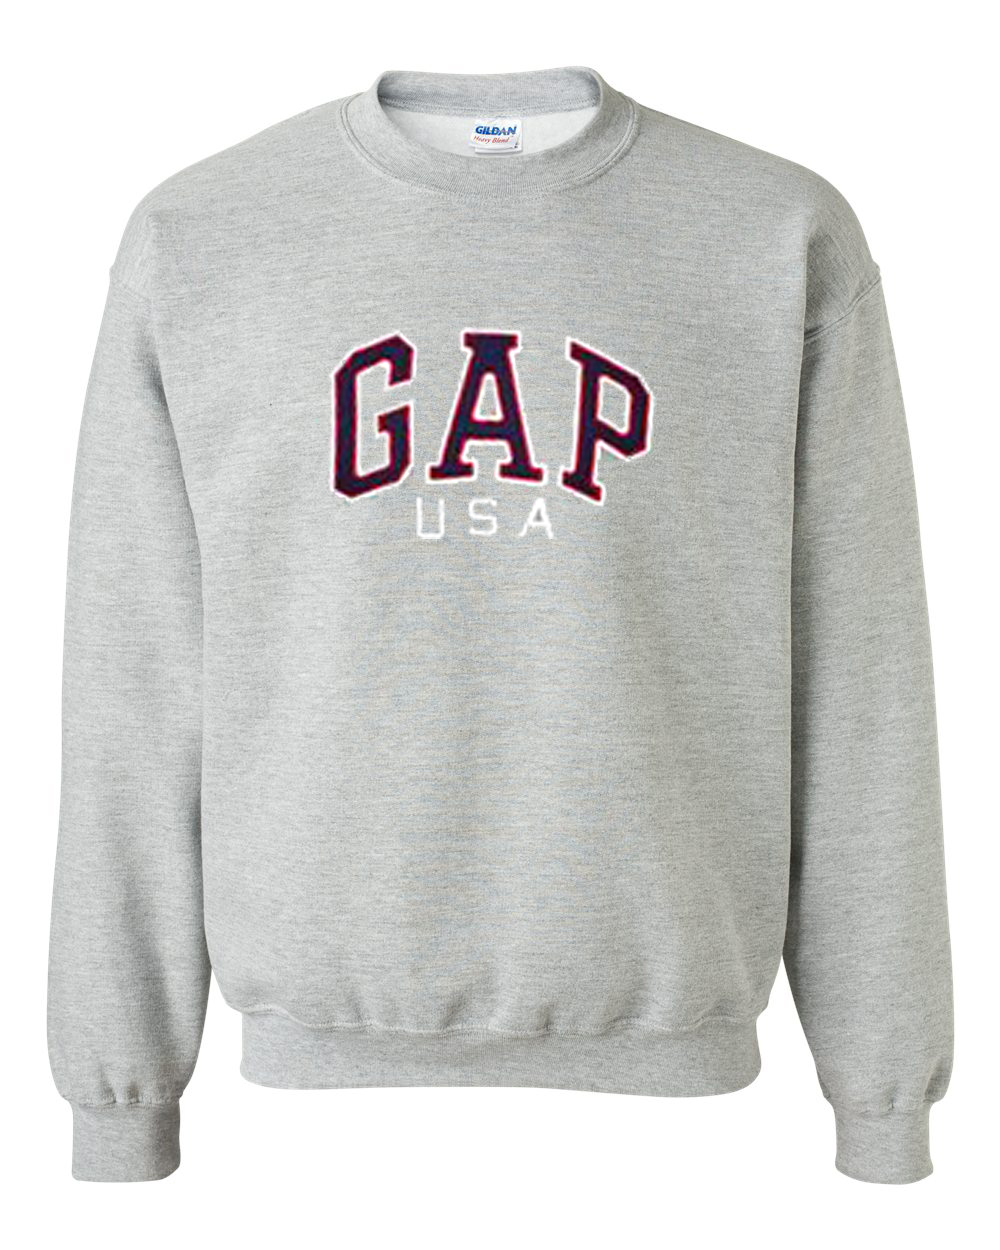 gap sweater